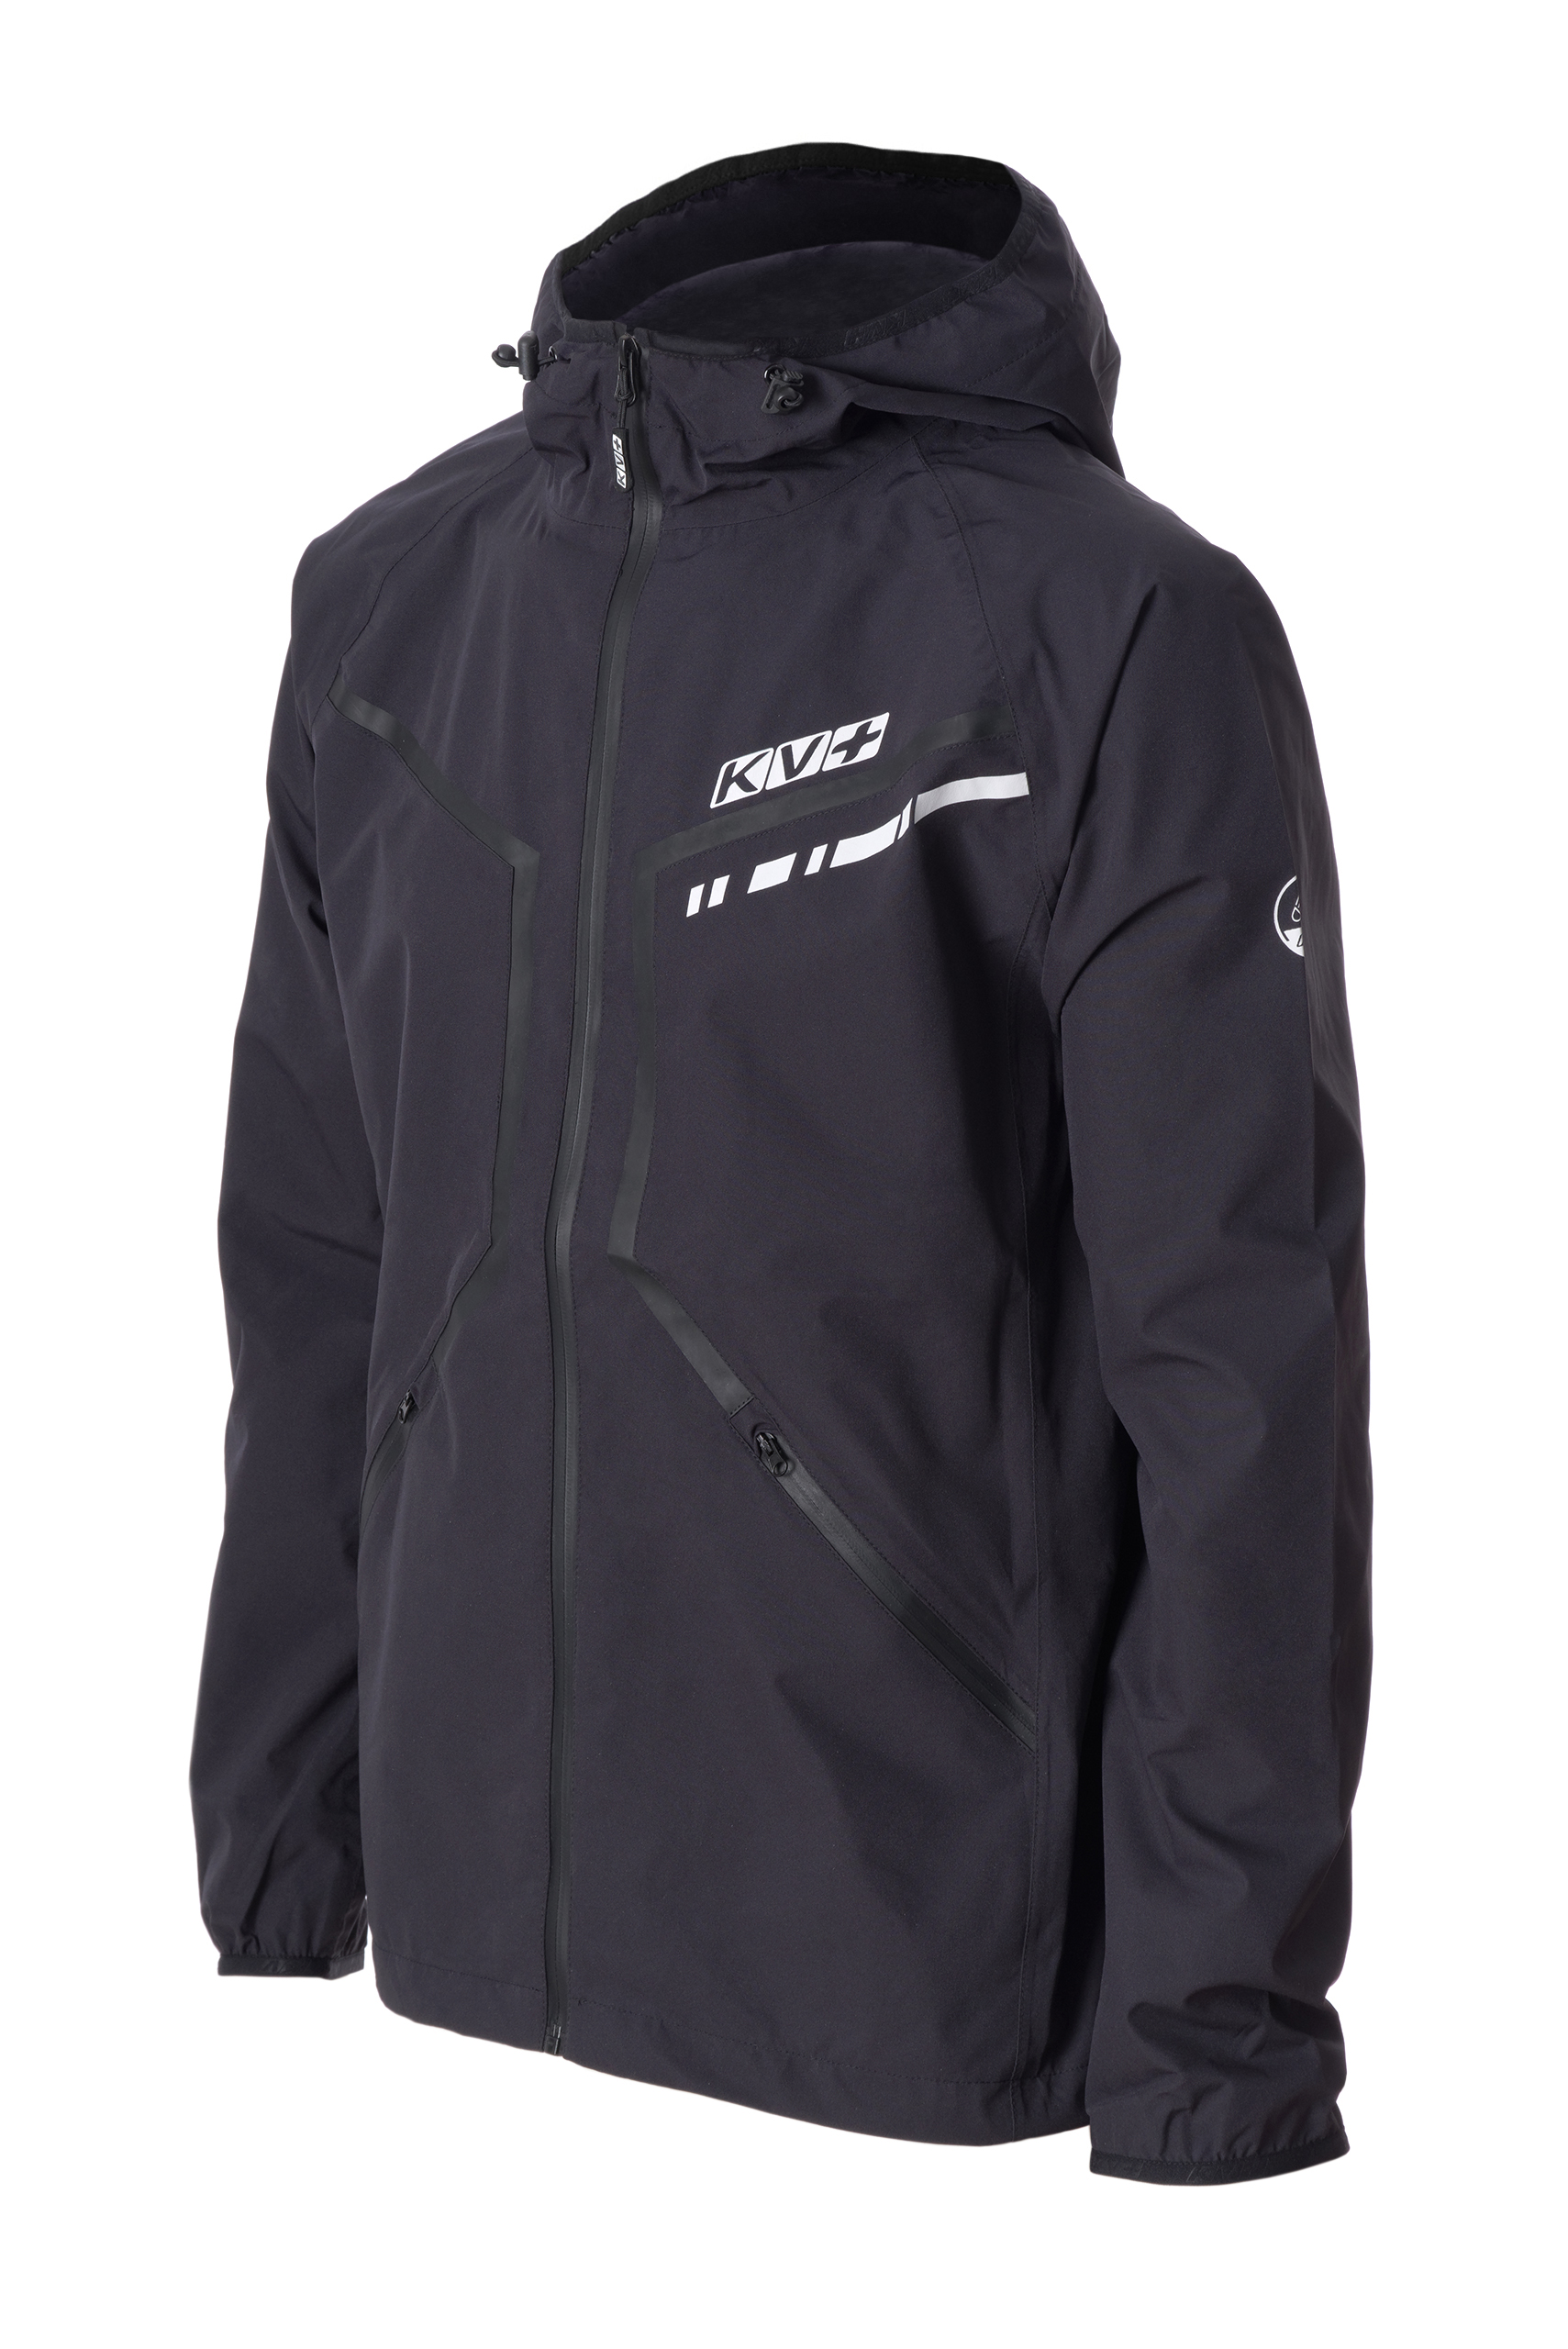 Ветровка унисекс KV+ IRELAND jacket waterproof черная XXL